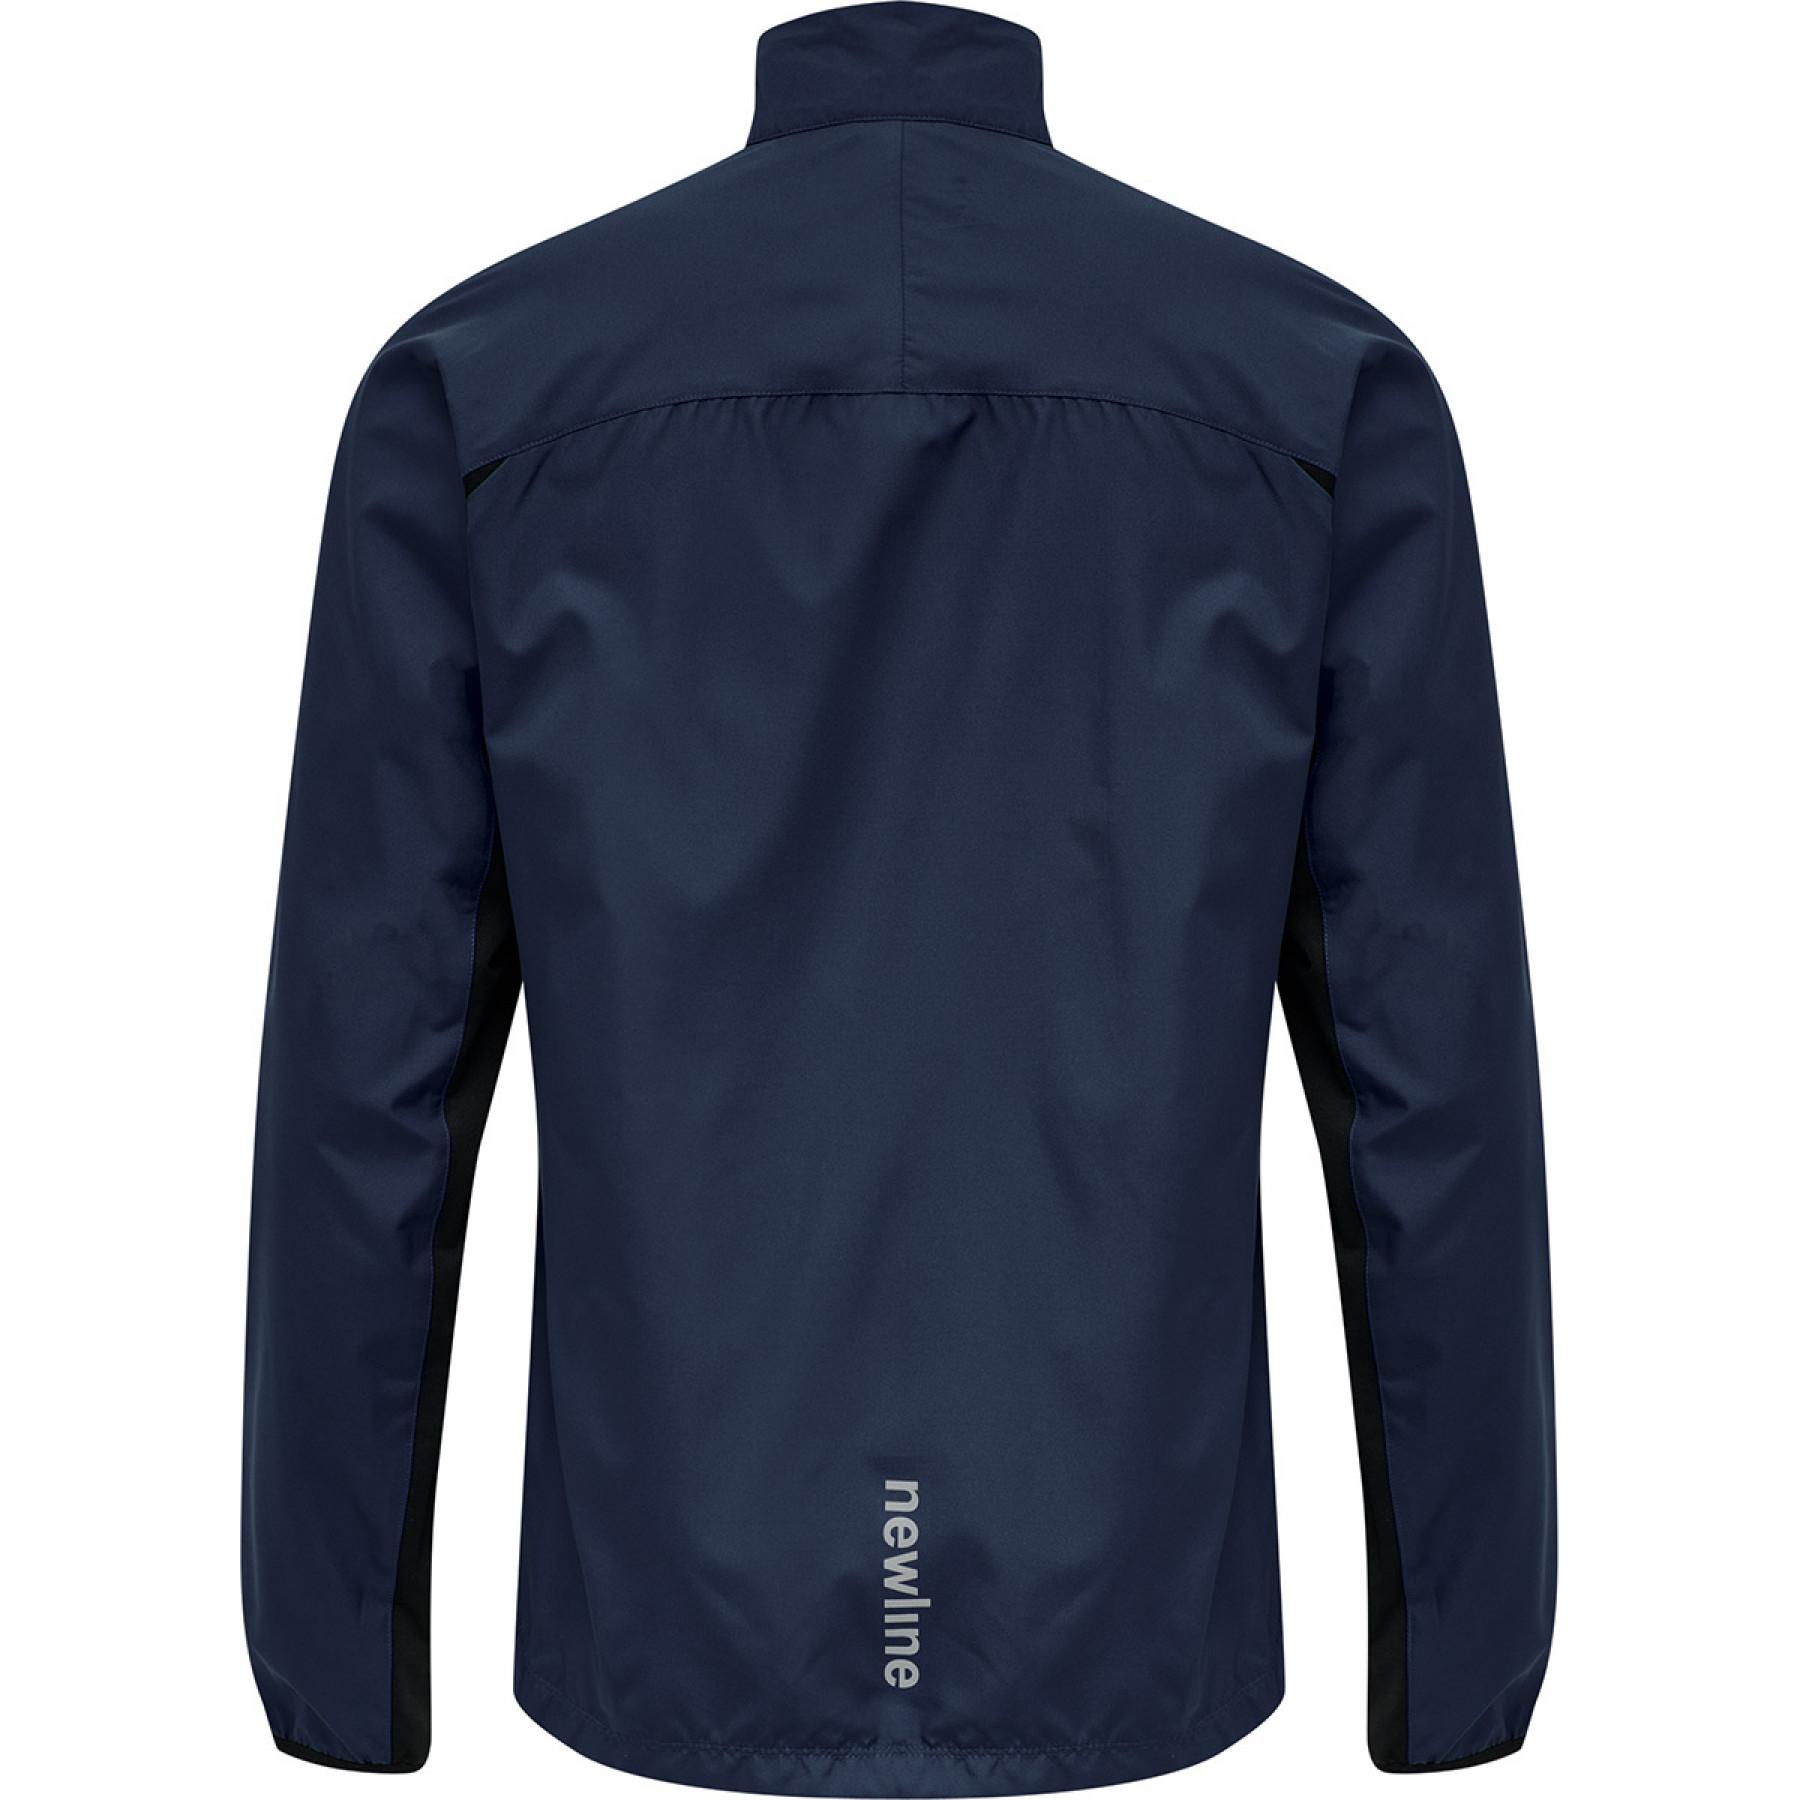 Jacket Newline core